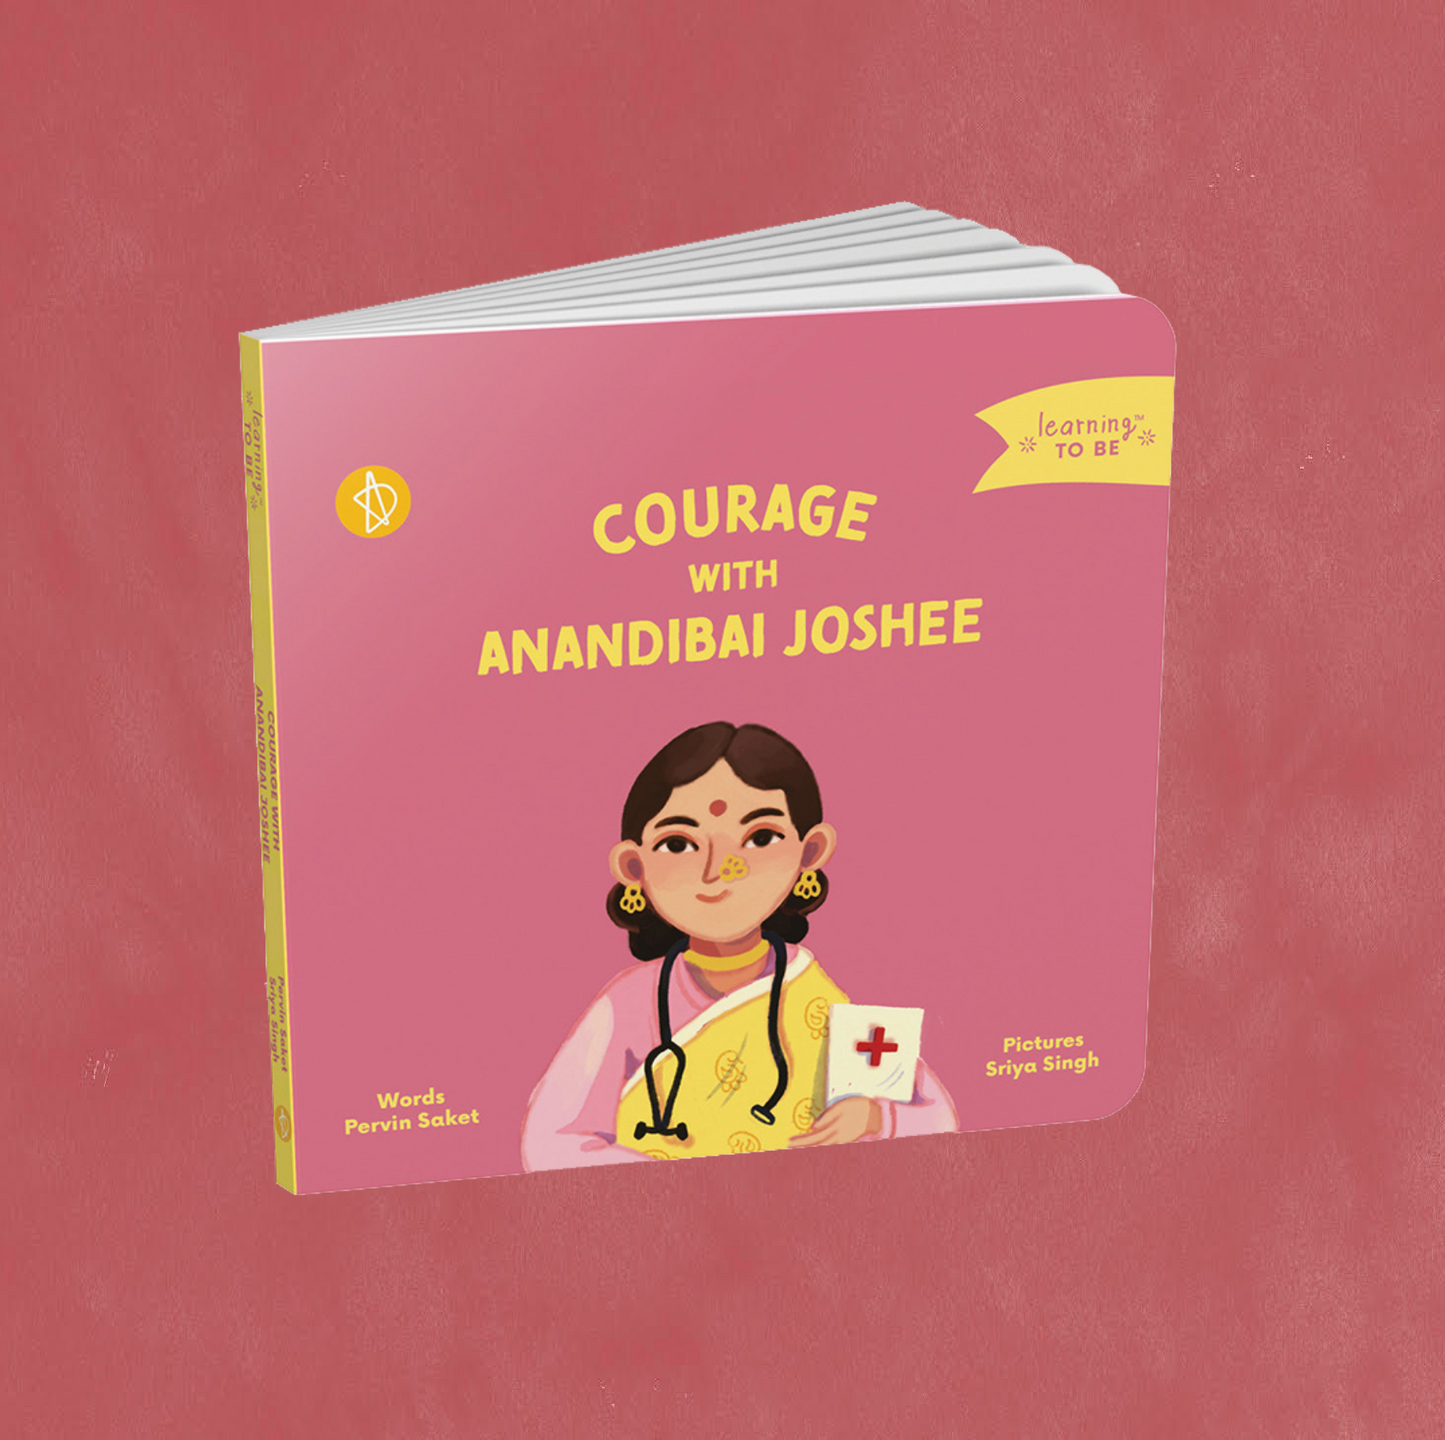 Courage with Anandibai Joshee by Adidev Press